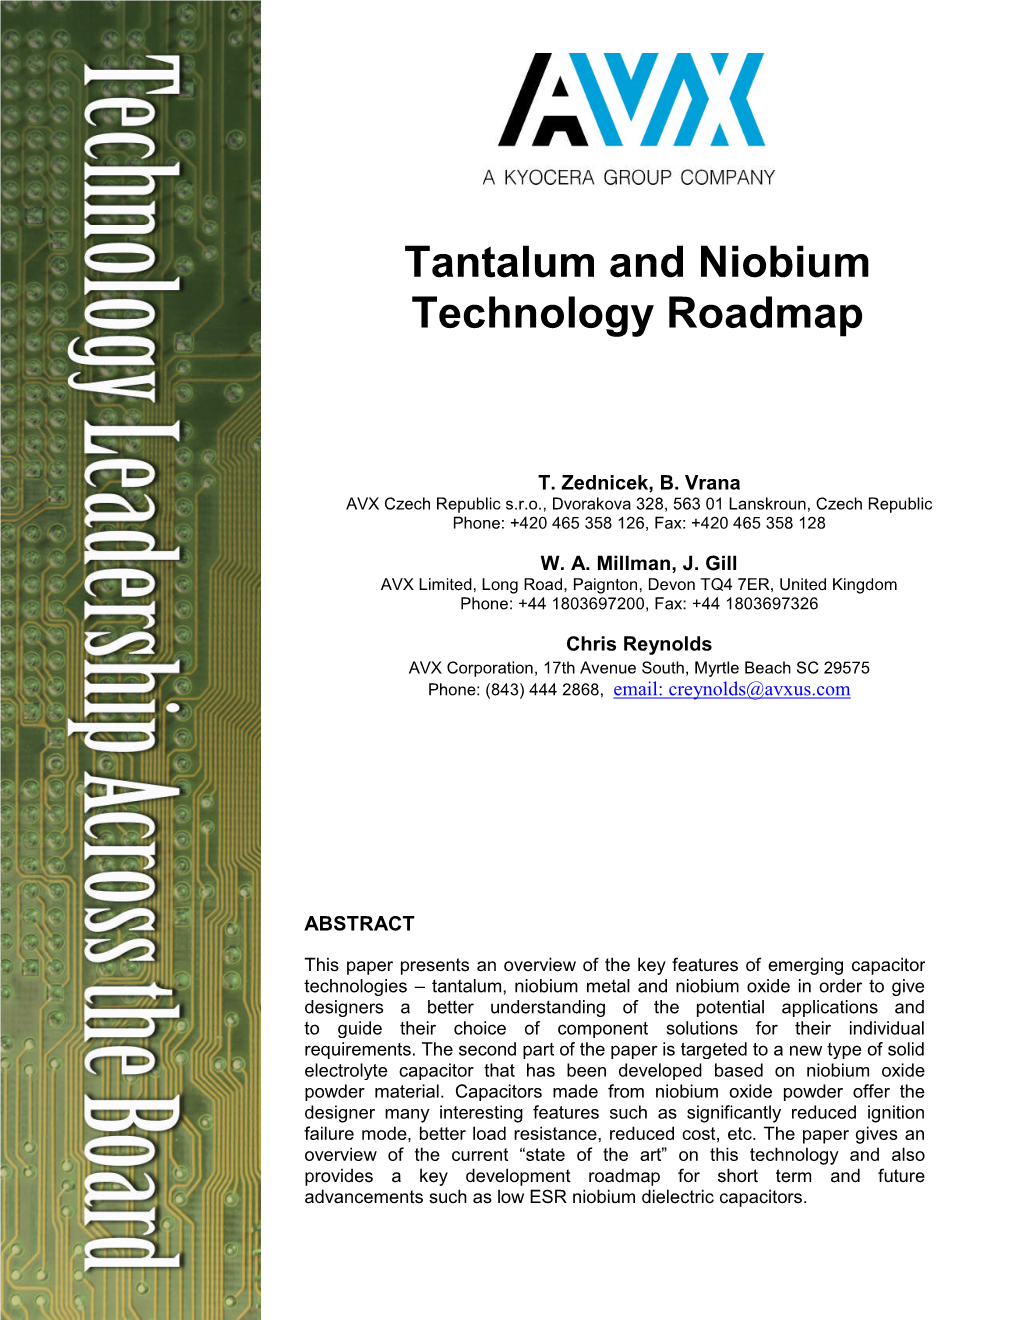 Tantalum and Niobium Technology Roadmap